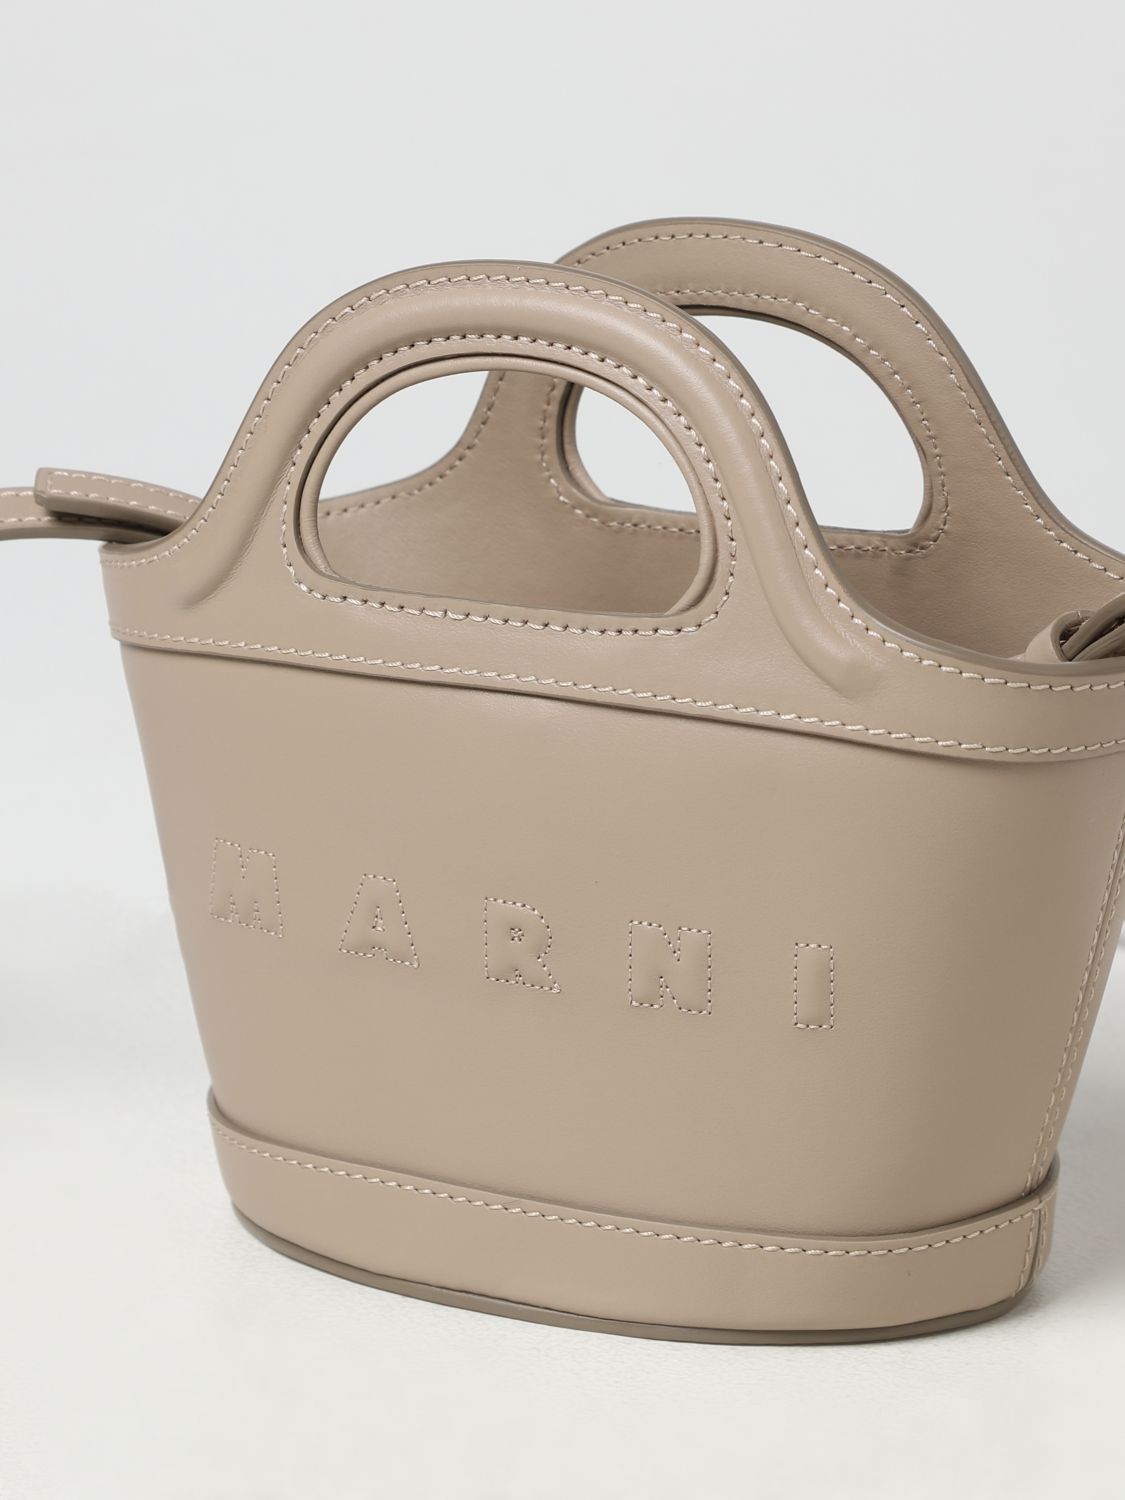 Marni Micro Tropicalia Summer Top Handle Bag in Brown